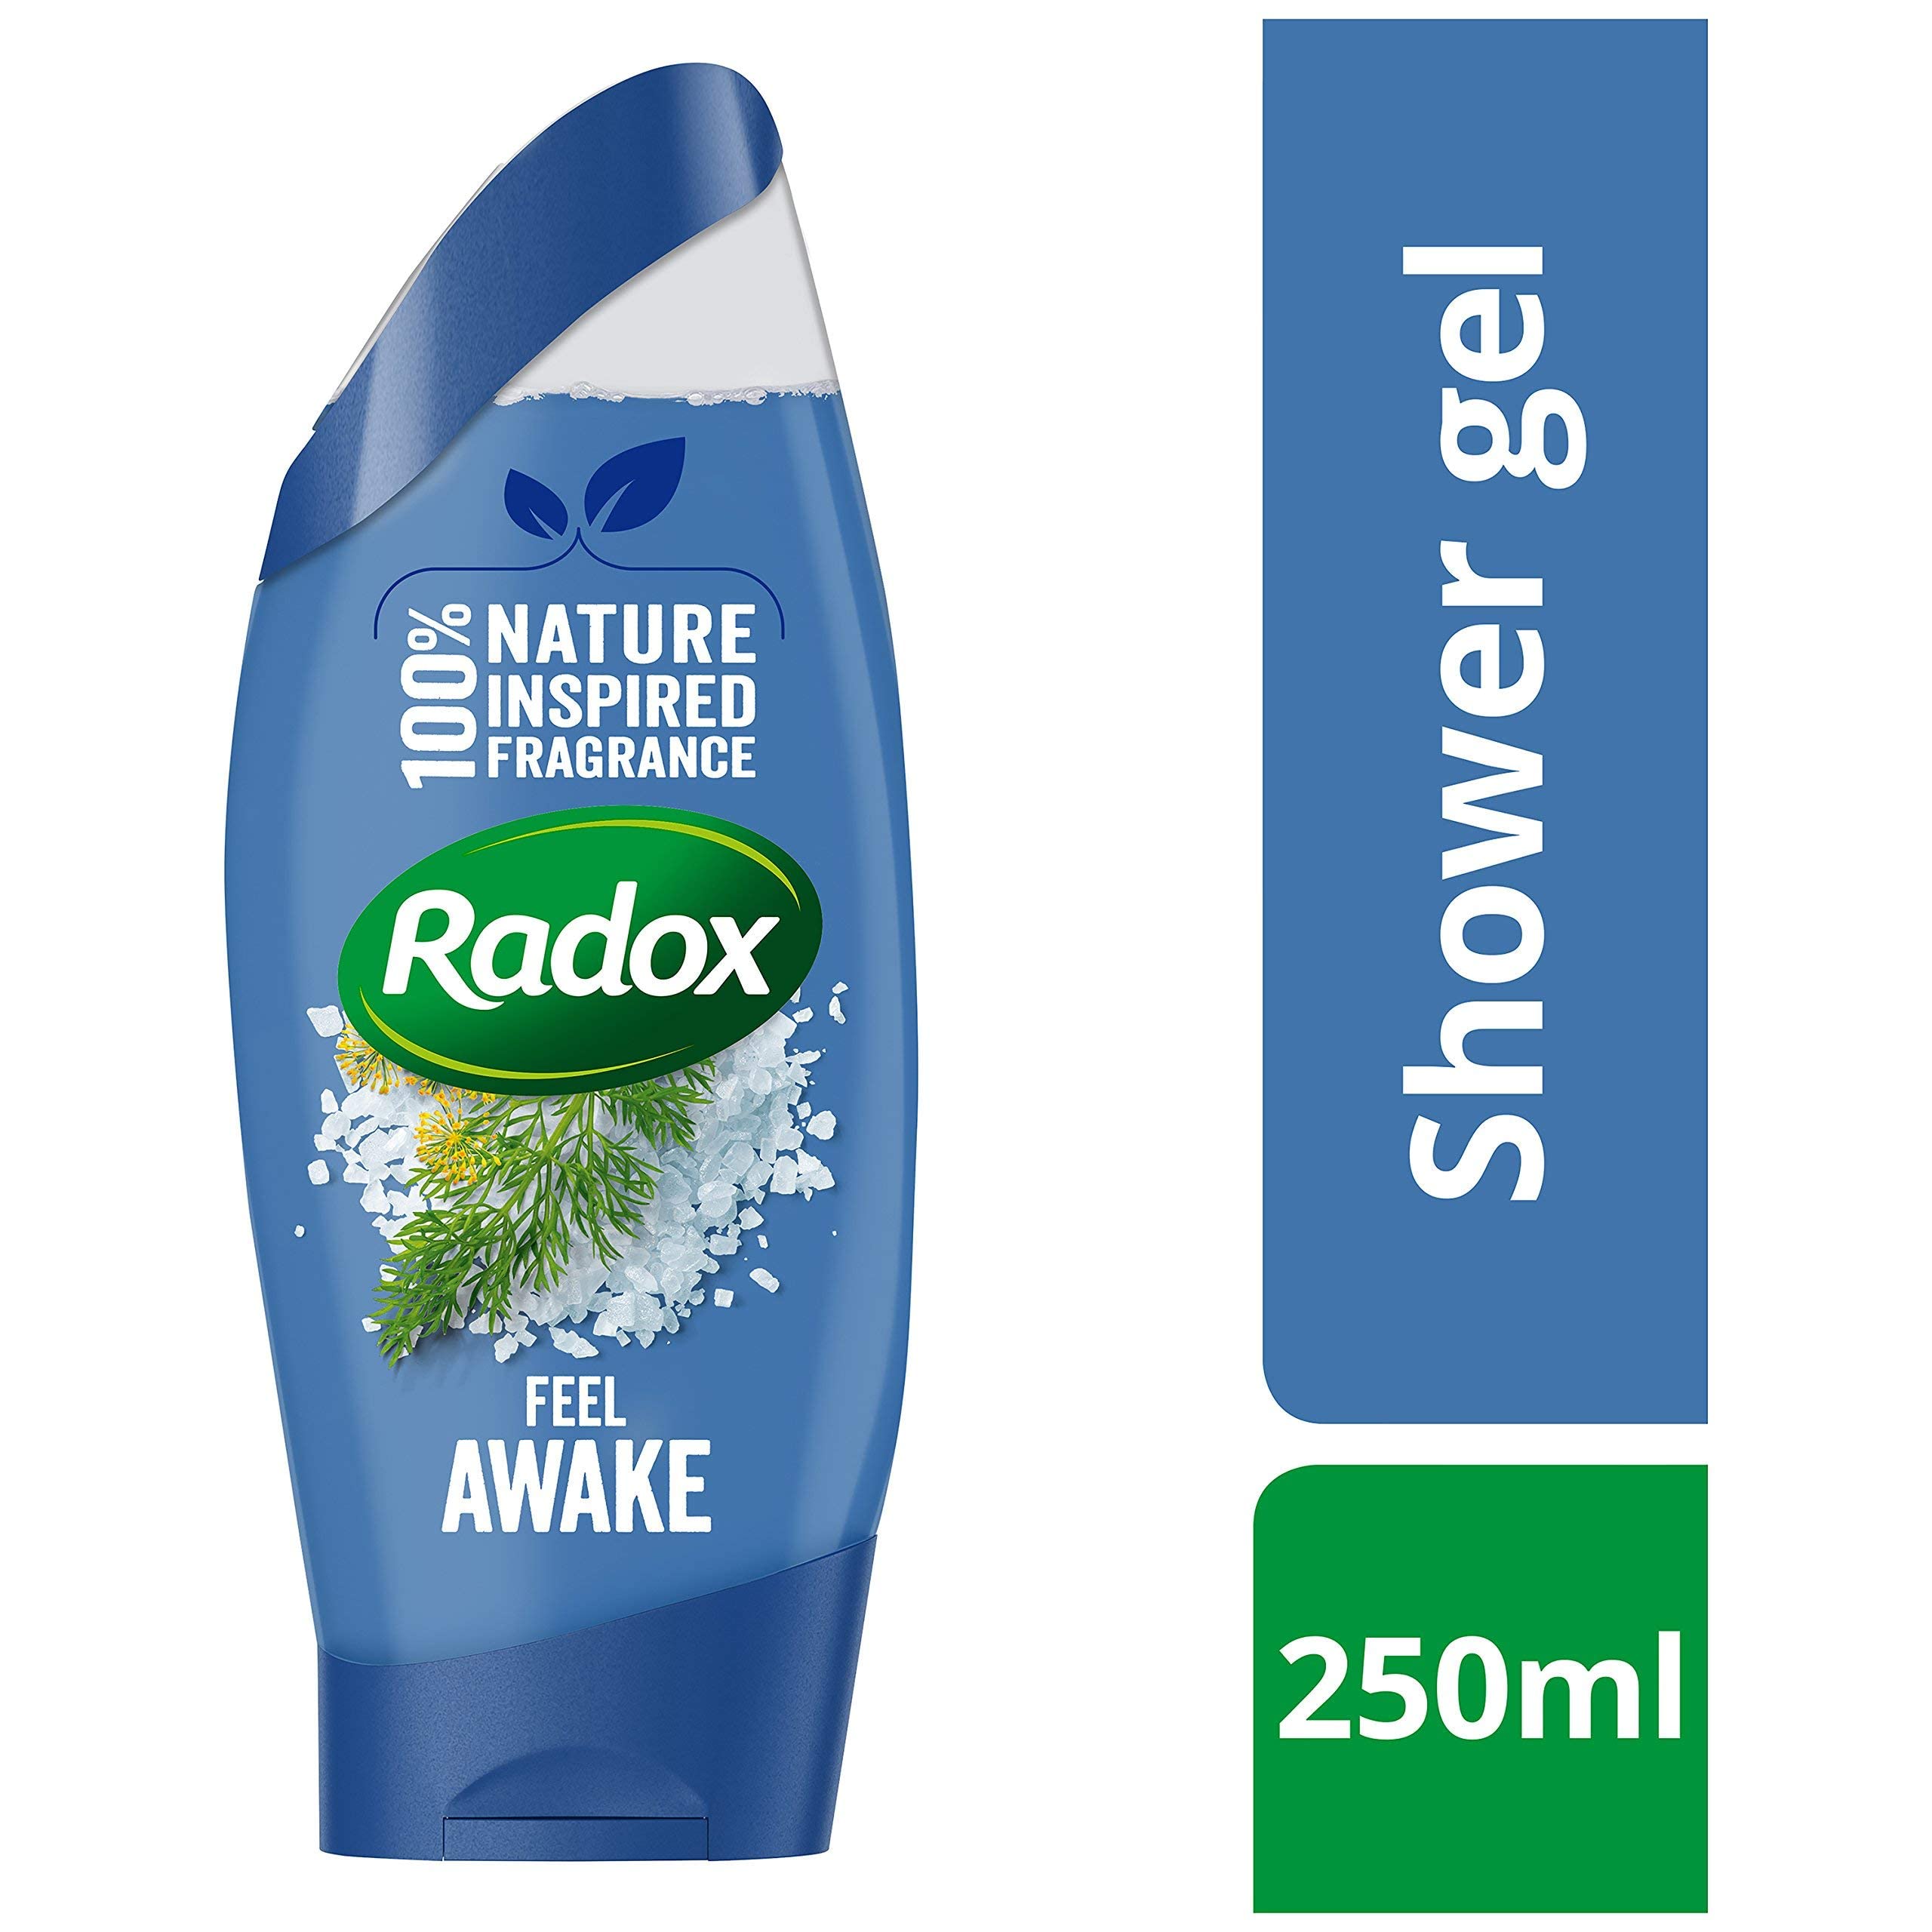 Radox for Men Feel Awake with Fennel & Sea Minerals 2in1 Shower & Shampoo, 250ml